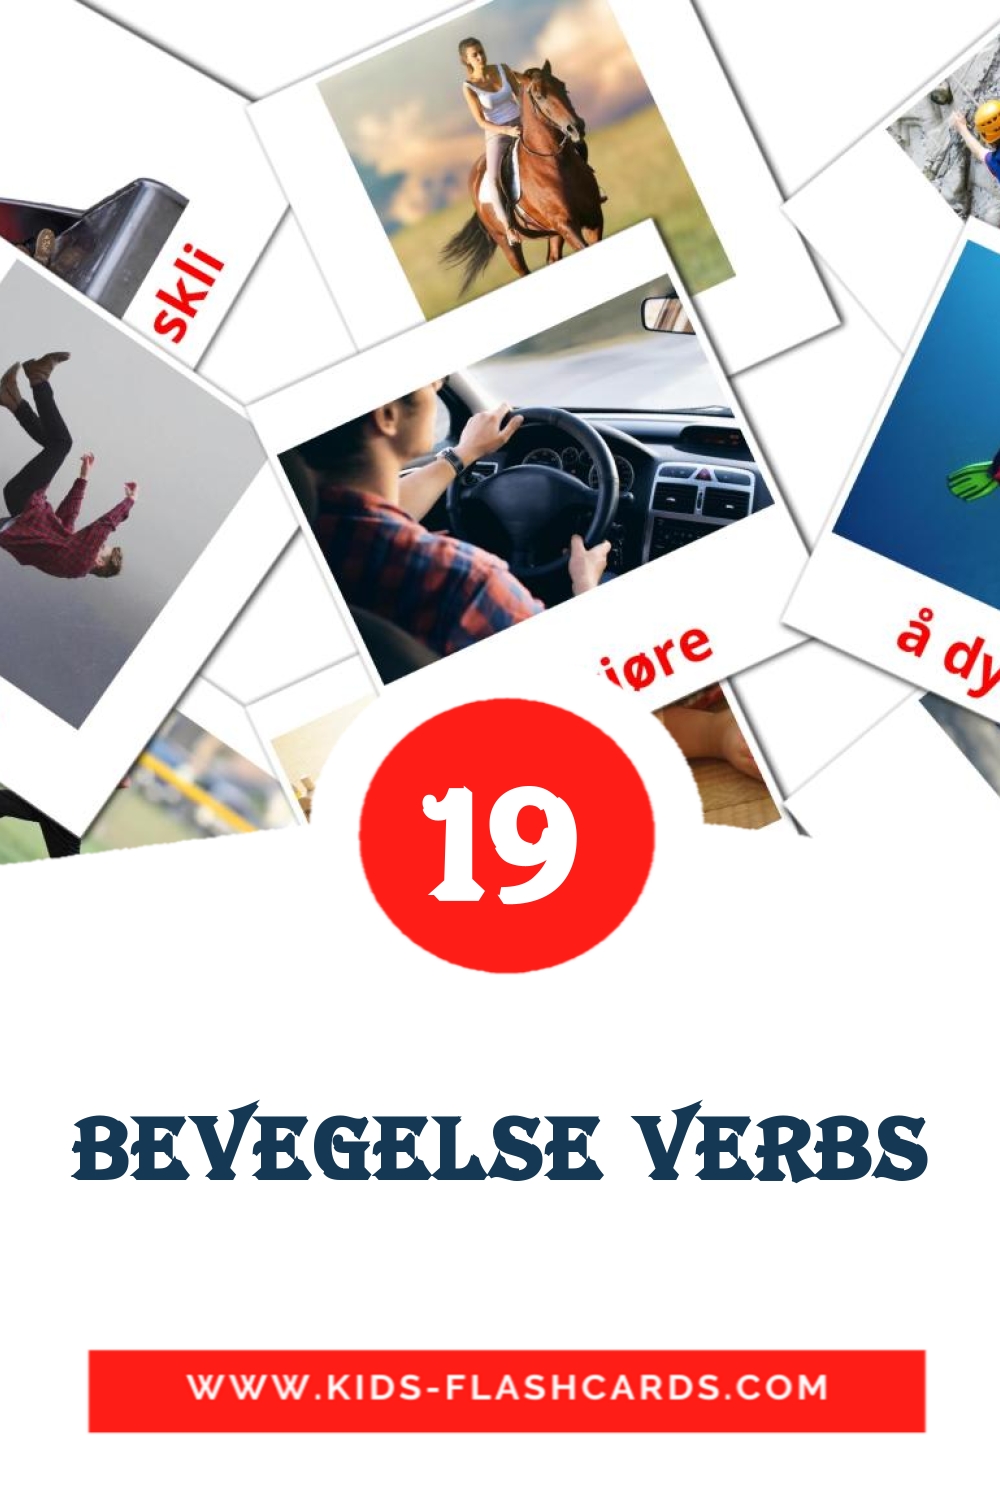 Bevegelse verbs на норвежском для Детского Сада (22 карточки)